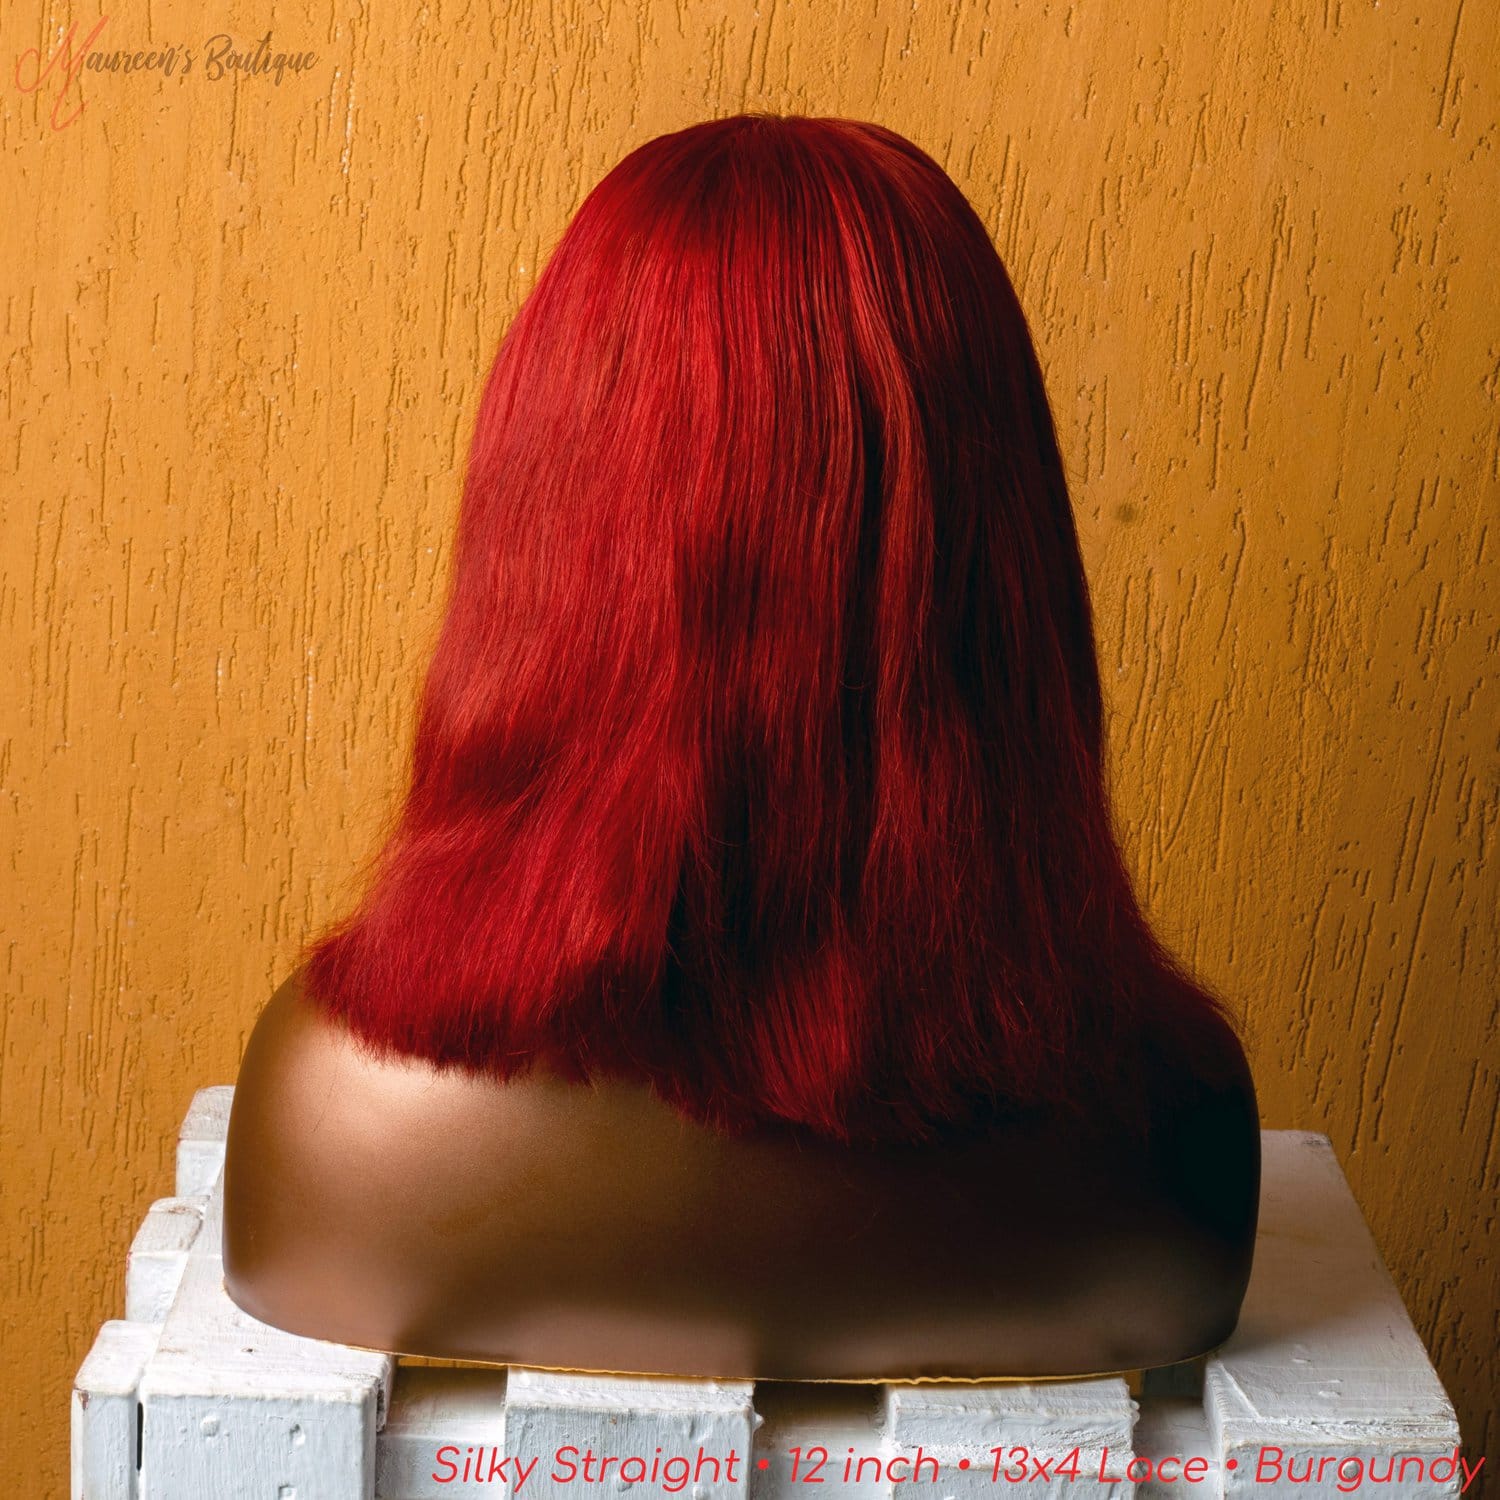 Silky Straight colored 13x4 human hair wig 12 inch burgundy maureens.com 3